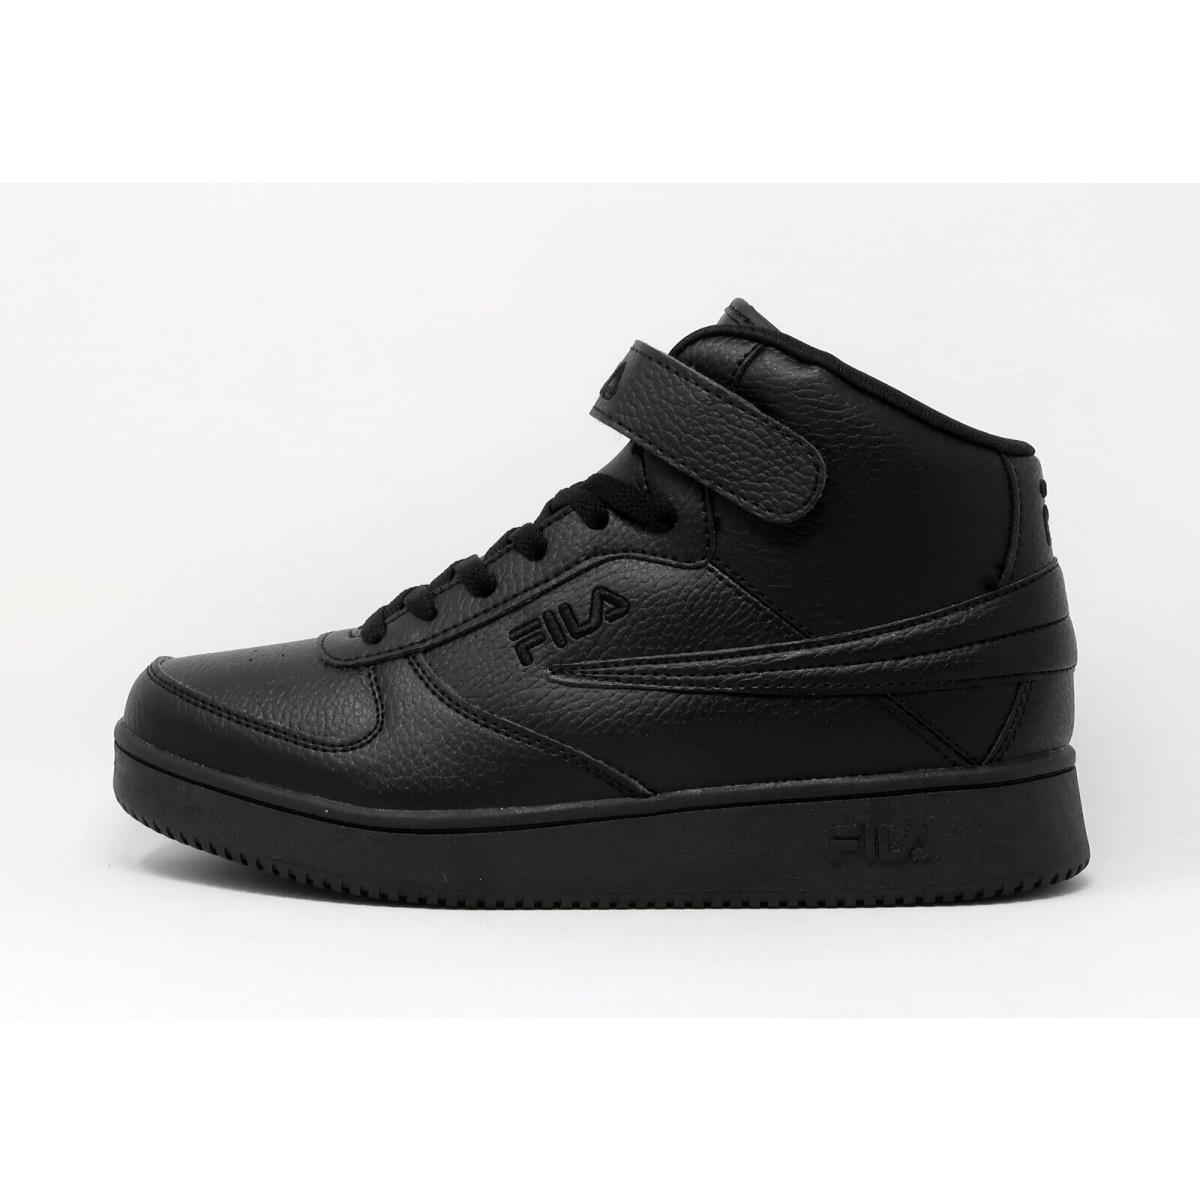 Fila A-high Triple Black Faux Leather Shoes Men Sneakers